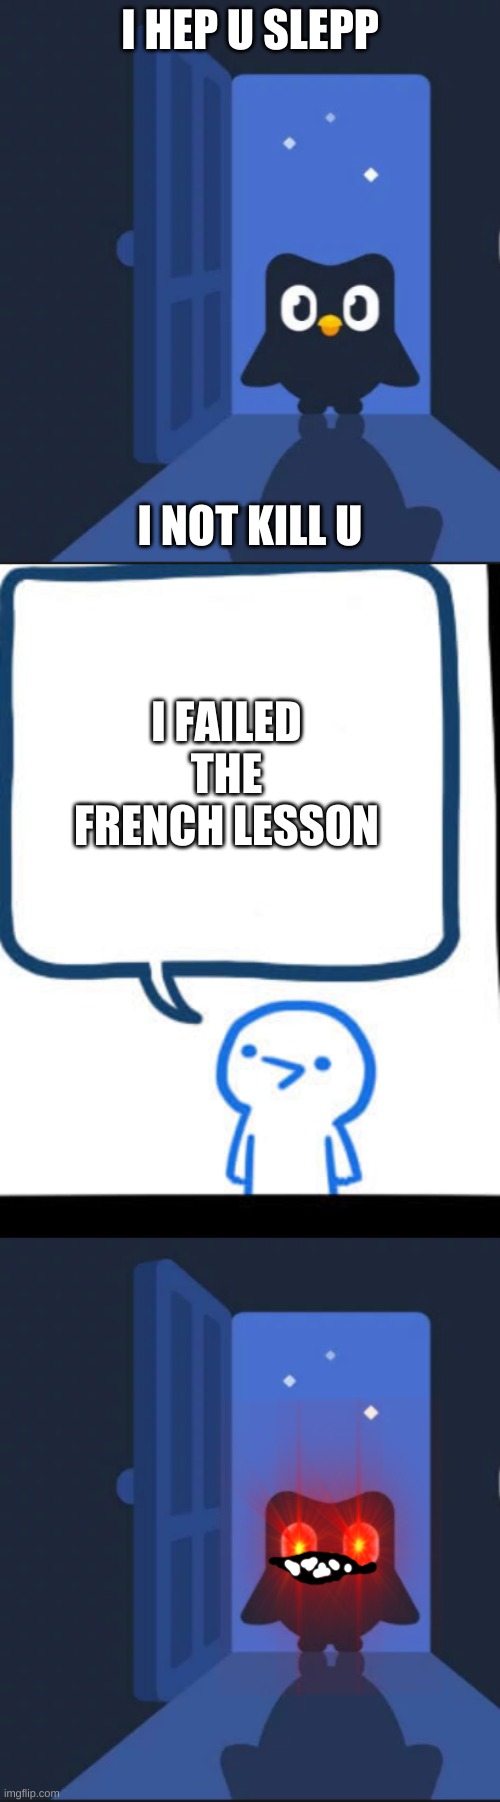 dddiiieee | I HEP U SLEPP; I NOT KILL U; I FAILED THE FRENCH LESSON | image tagged in duolingo bird,dumbest fella | made w/ Imgflip meme maker